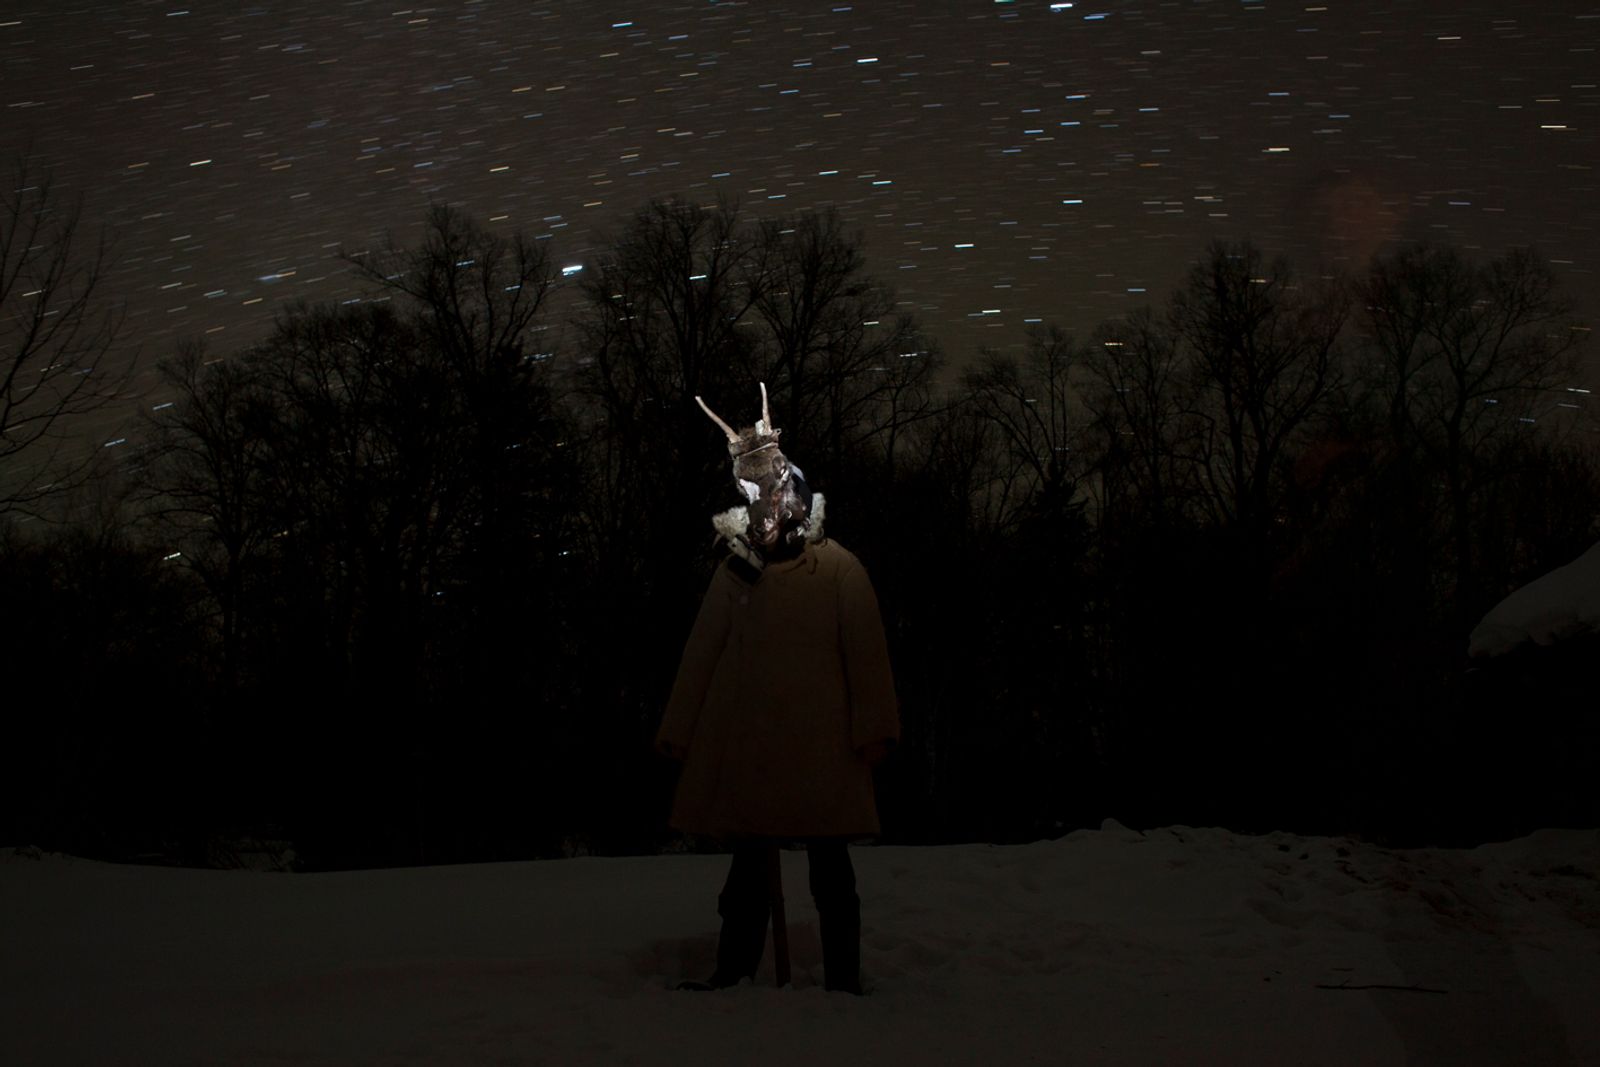 © Alvaro Laiz - Roe-deer man under the Orion (the Hunter) constellation